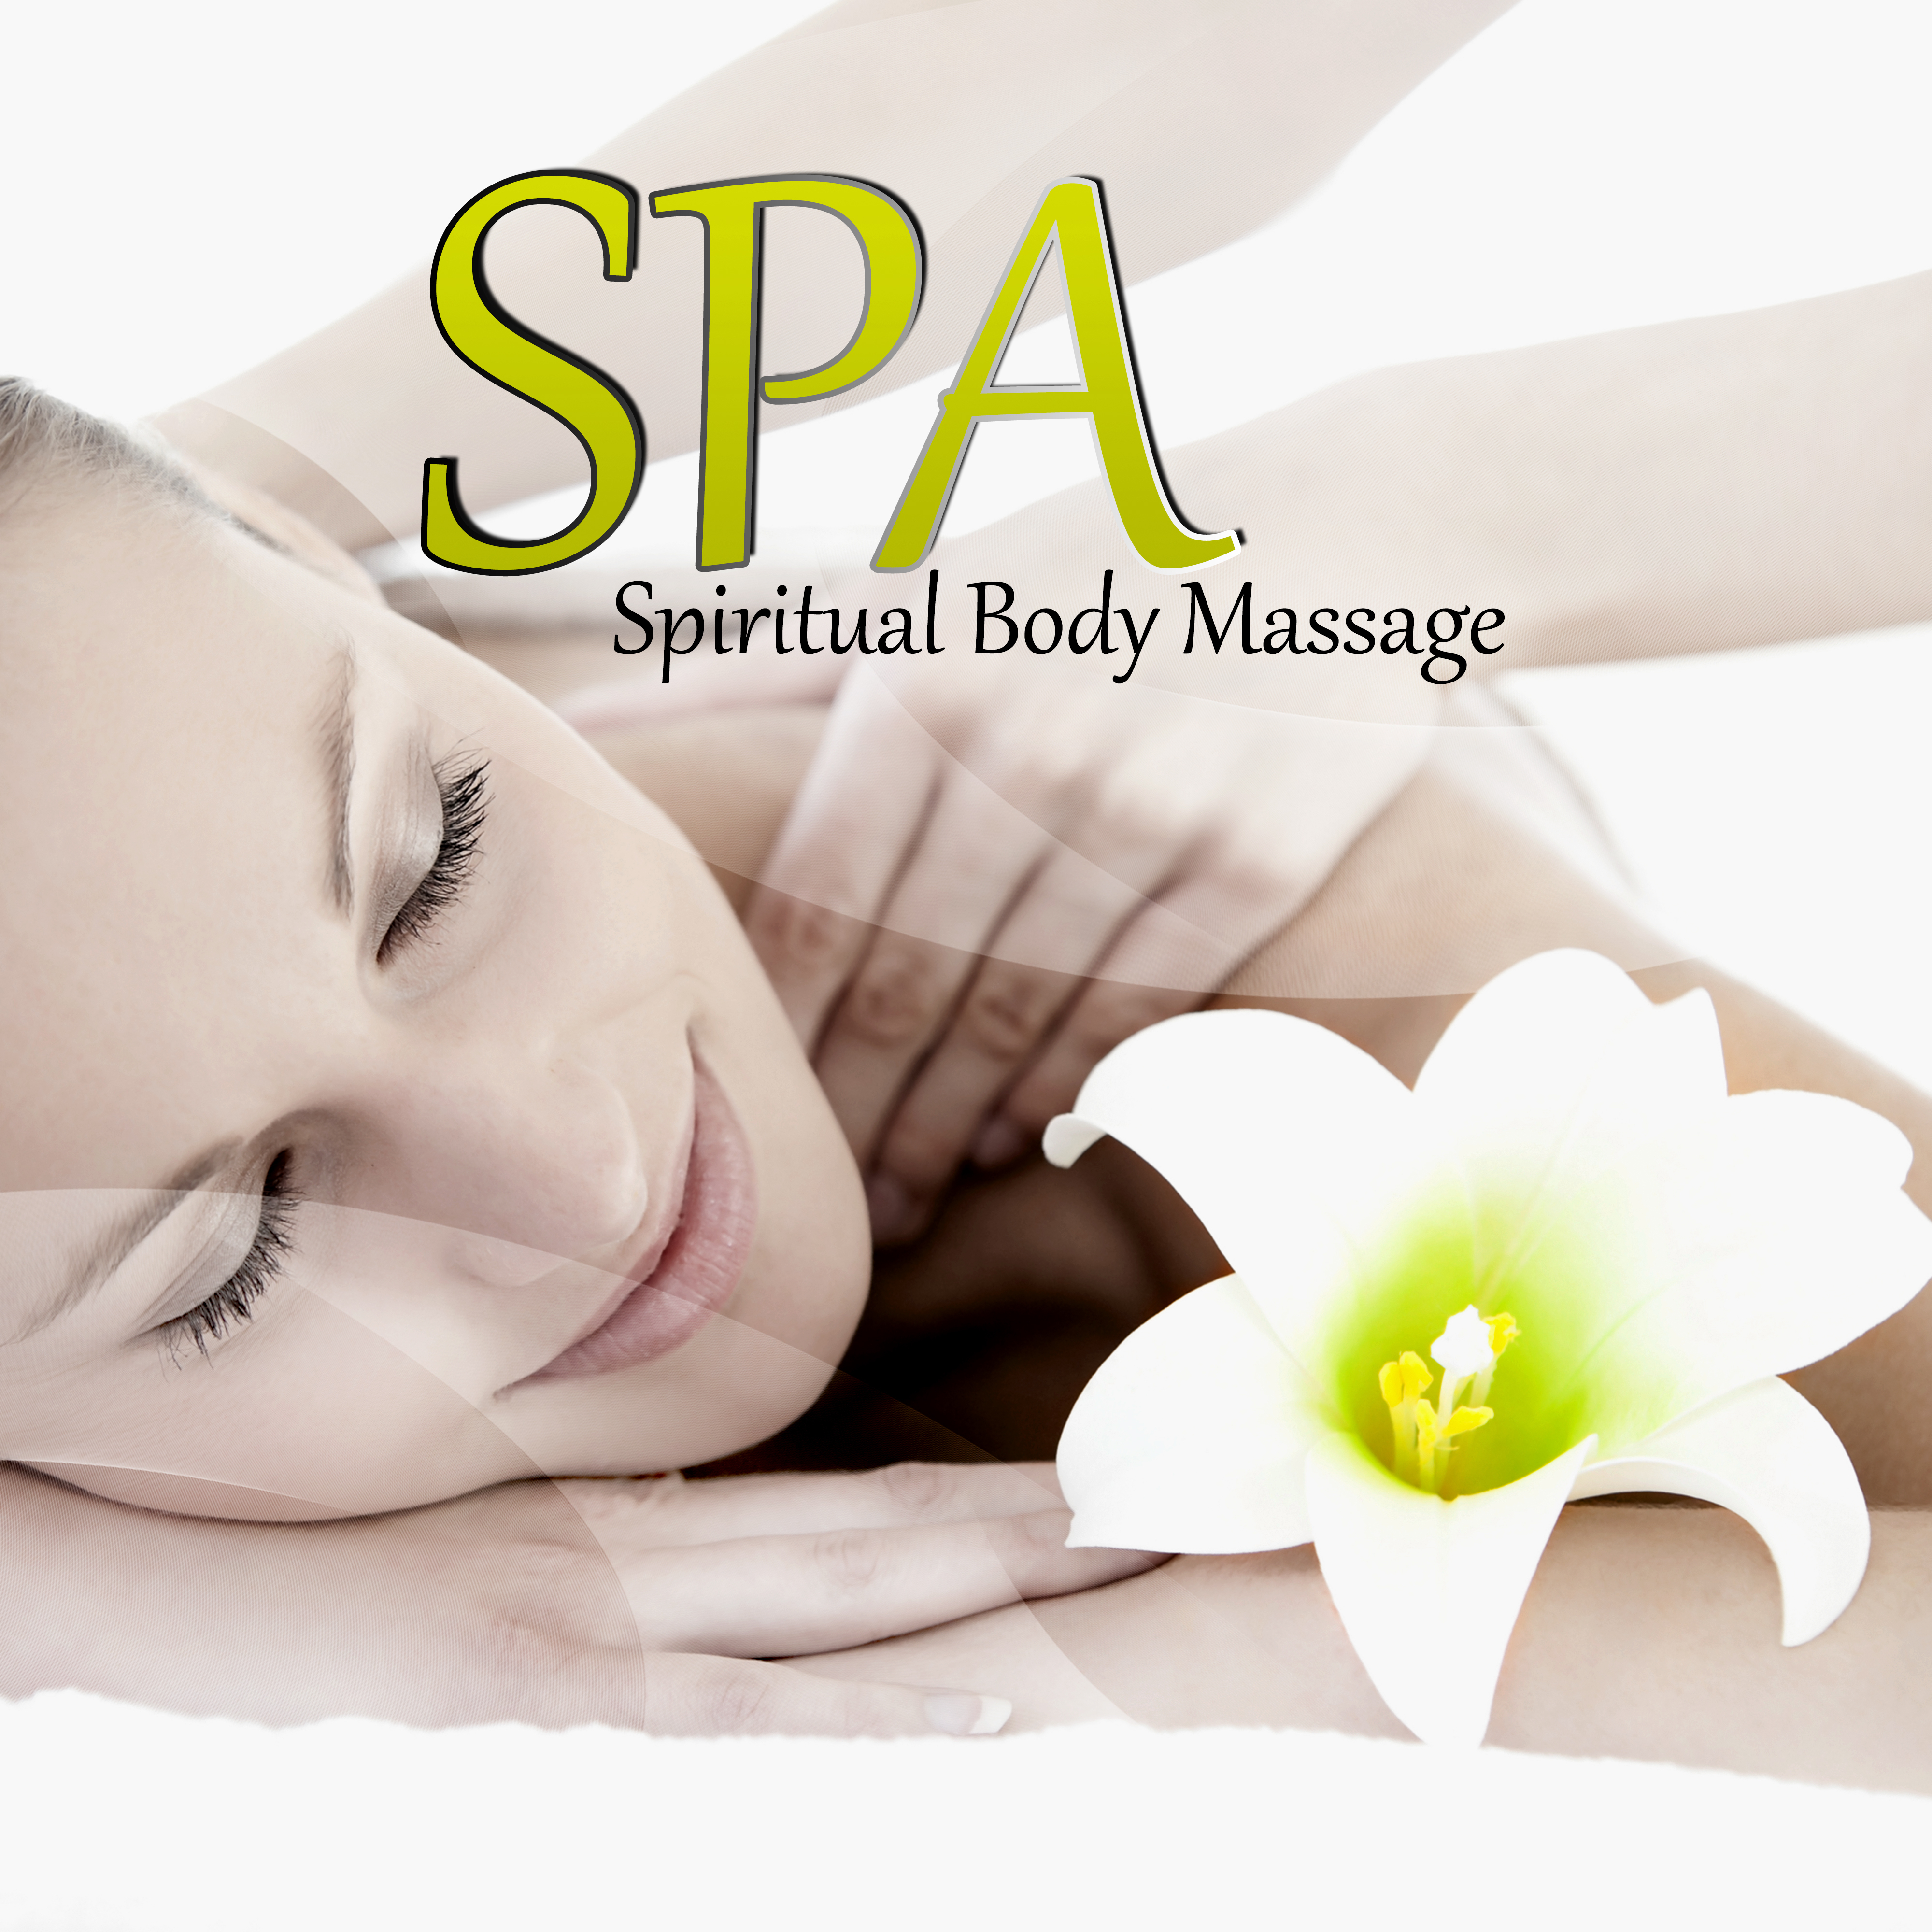 Spa - Spiritual Body Massage – Body Connection, Natural Massage, Tranquilidad, Asian Zen, Wellness, Massage Therapy, Comfort, Blissful